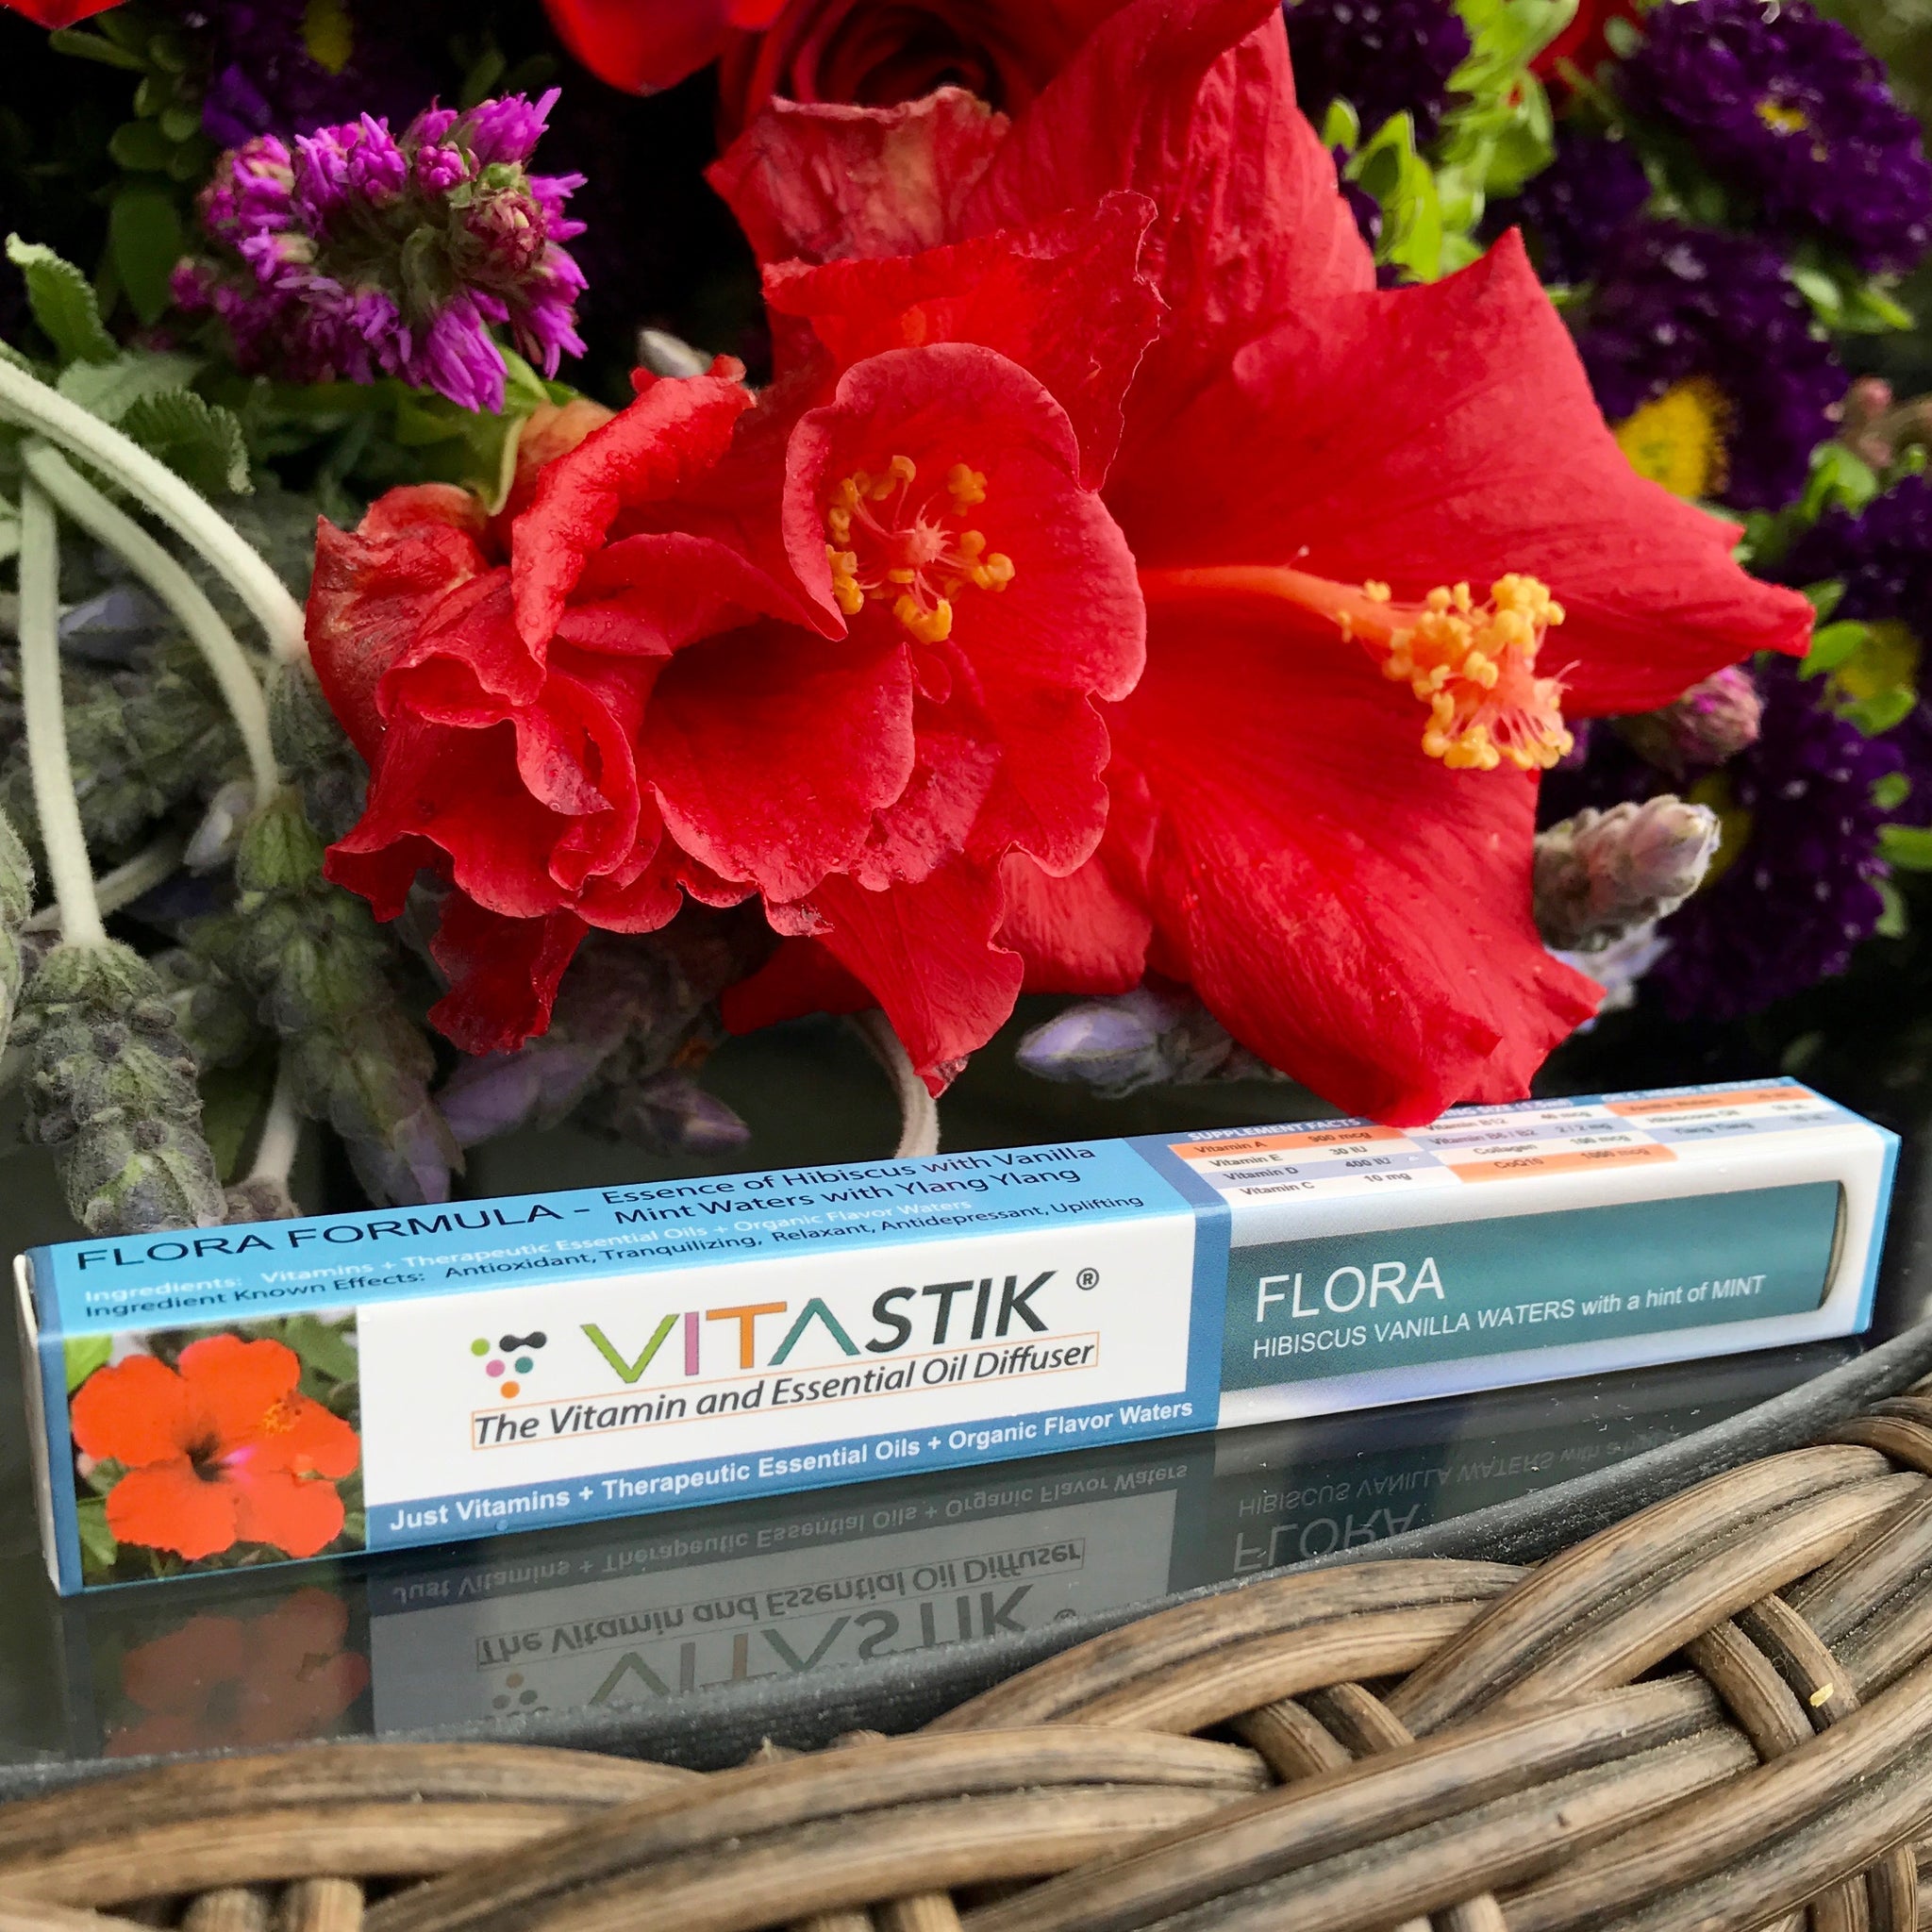 VitaStik Amore - Inhale Healing Organic Rose Waters with Vitamin Vapor